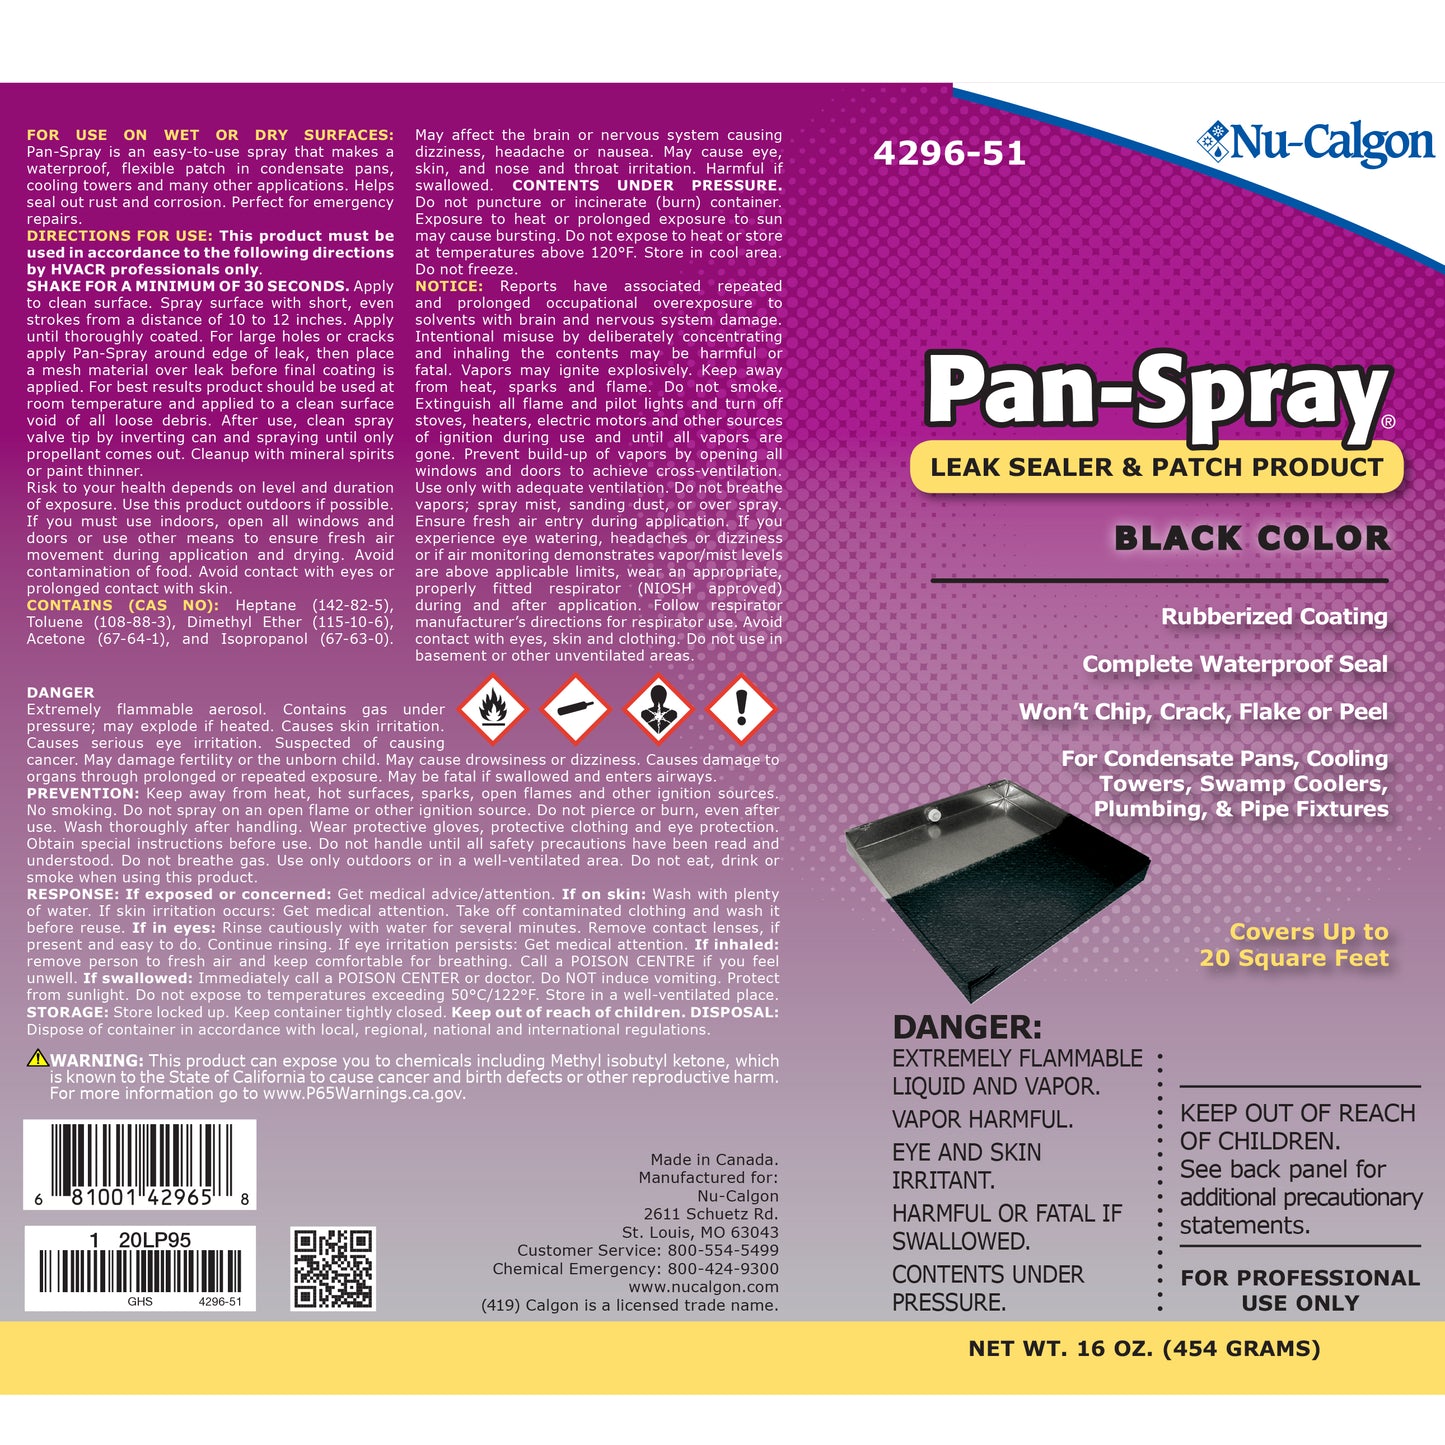 4296-51 - Pan-Spray Leak Sealer & Patch Product - 16 oz - Black